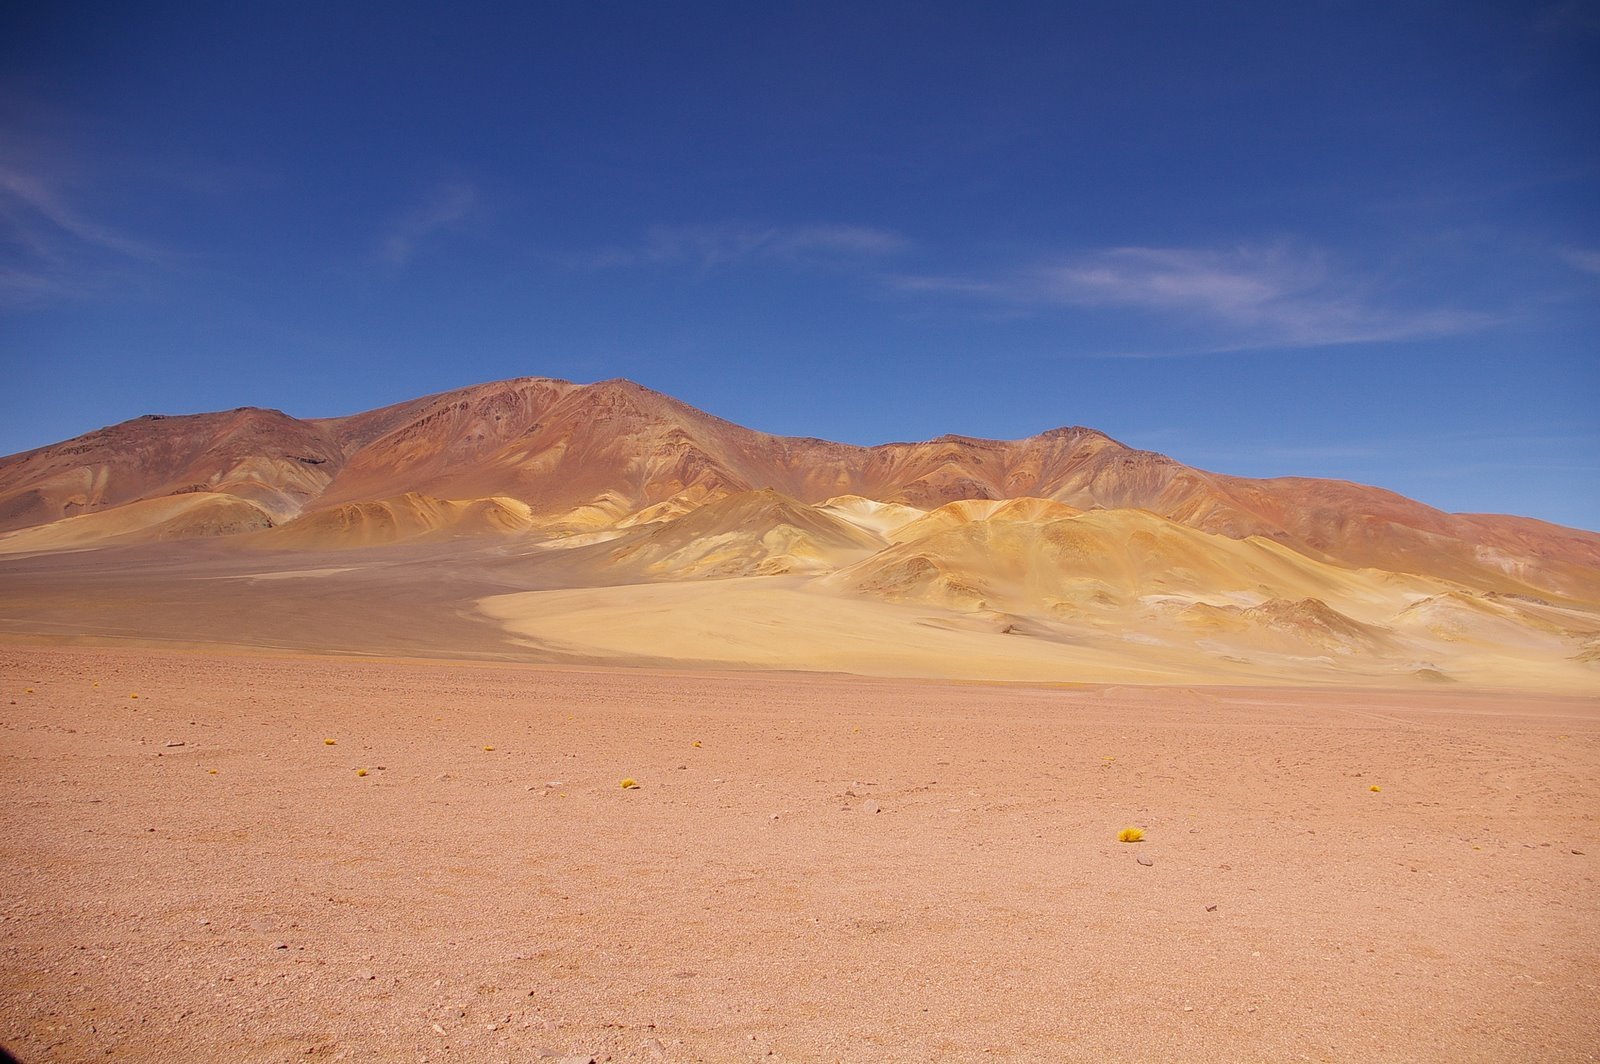 nos acercamos al desierto de Atacama